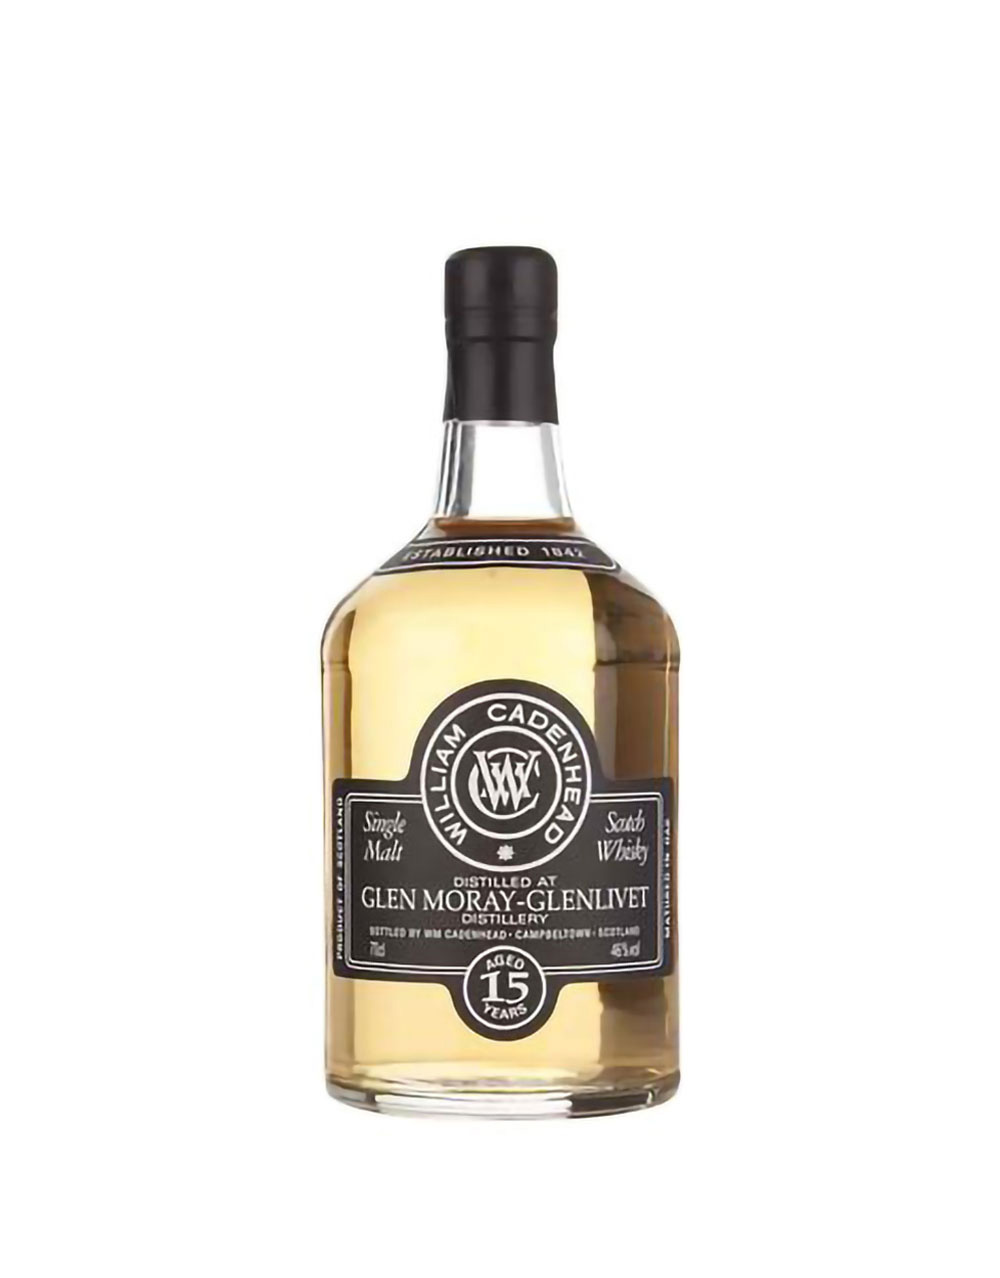 Cadenhead 15 Year Glen Moray-Glenlivet Old Single Malt Scotch Whisky